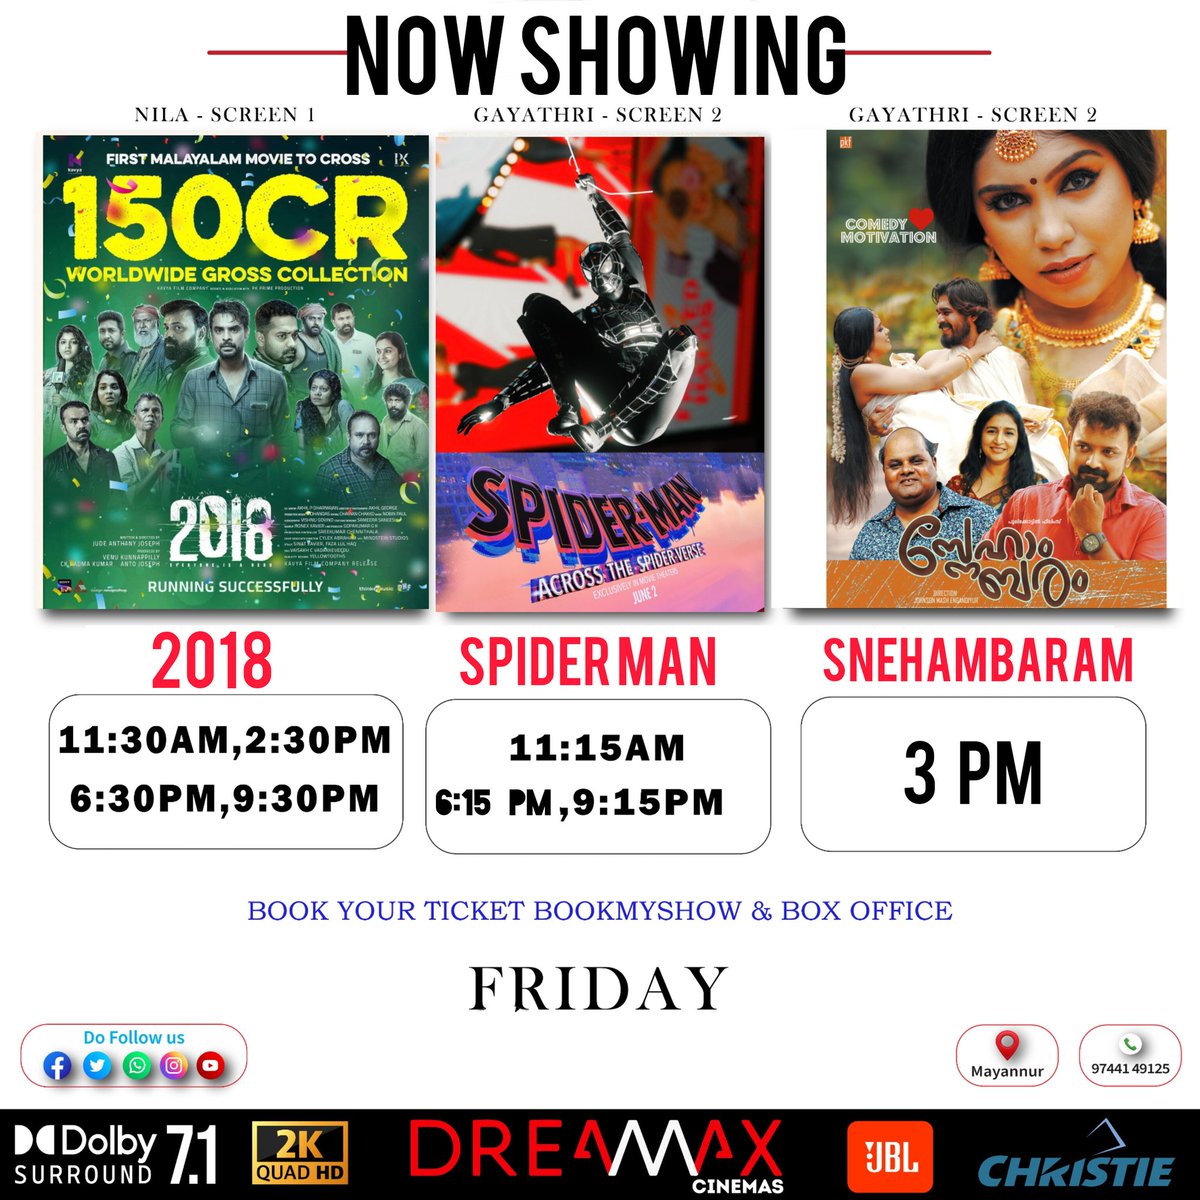 Dreamax Cinemas-Now showing 

#2018EveryoneIsAHero 
#2018movie #KeralaFloods  #JudeAnthanyJoseph #VenuKunnappilly  #TovinoThomas #AsifAli #KunchackoBoban #TanviRam  #Sshivada #VinithaKoshy #VineethSreenivasan #Narain #Lal  #MalayalamCinema

#SpiderManAcrossTheSpiderVerse